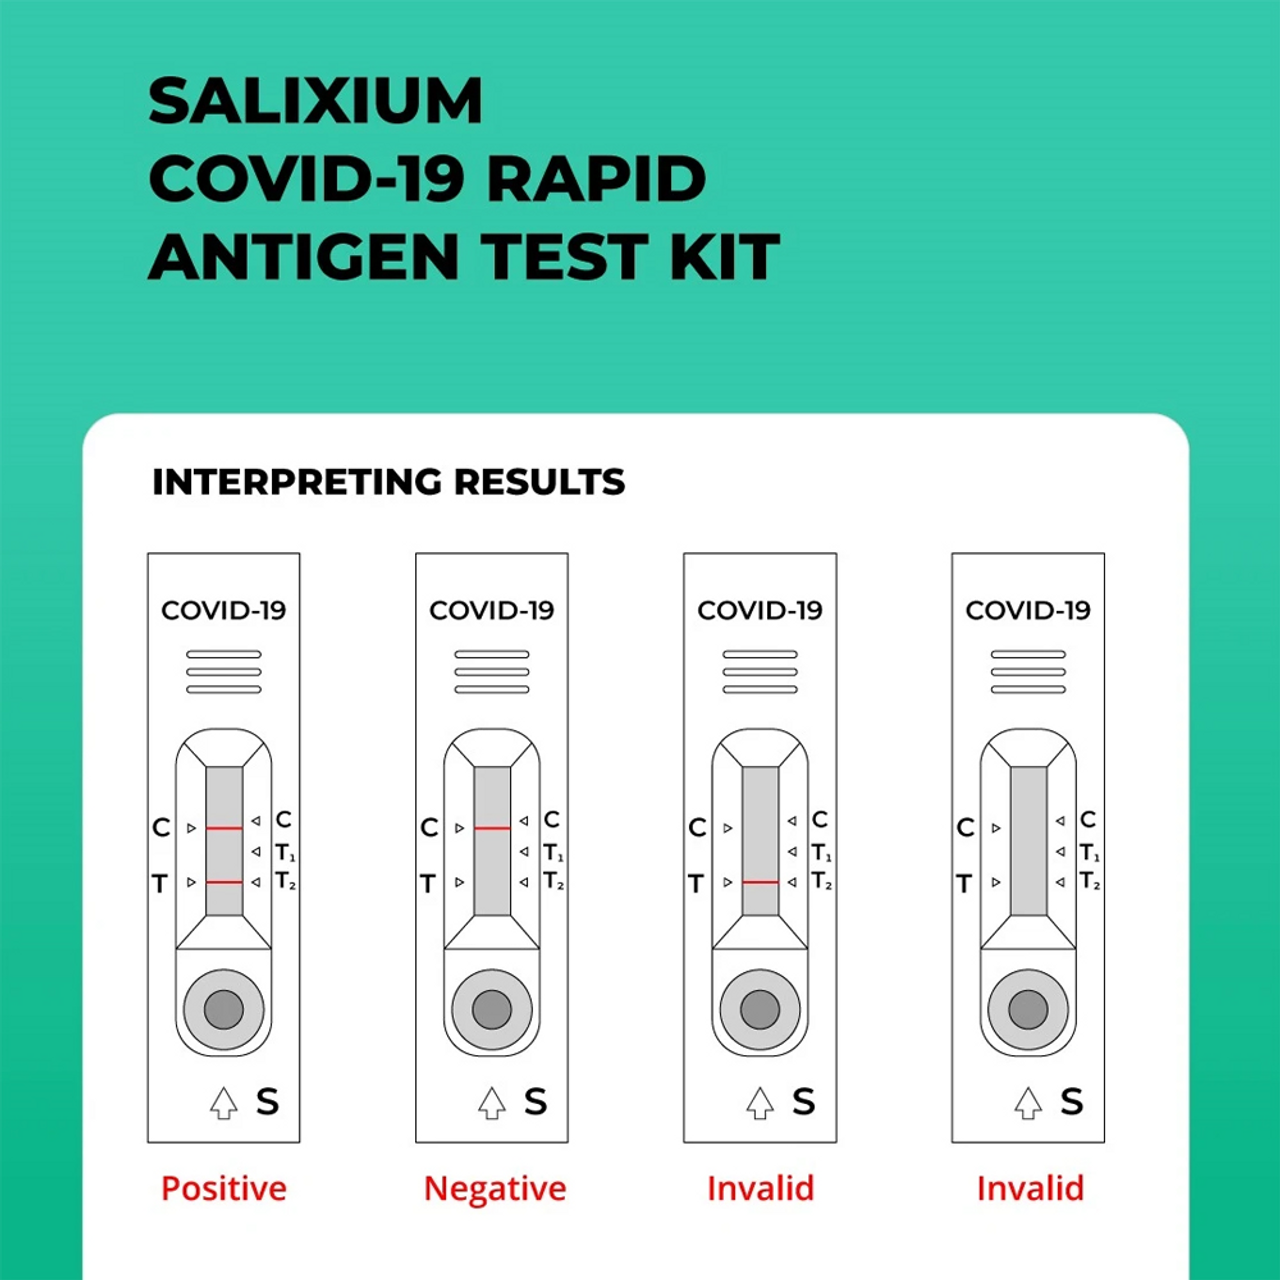 SALIXIUM COVID-19 RAPID ANTIGEN TEST